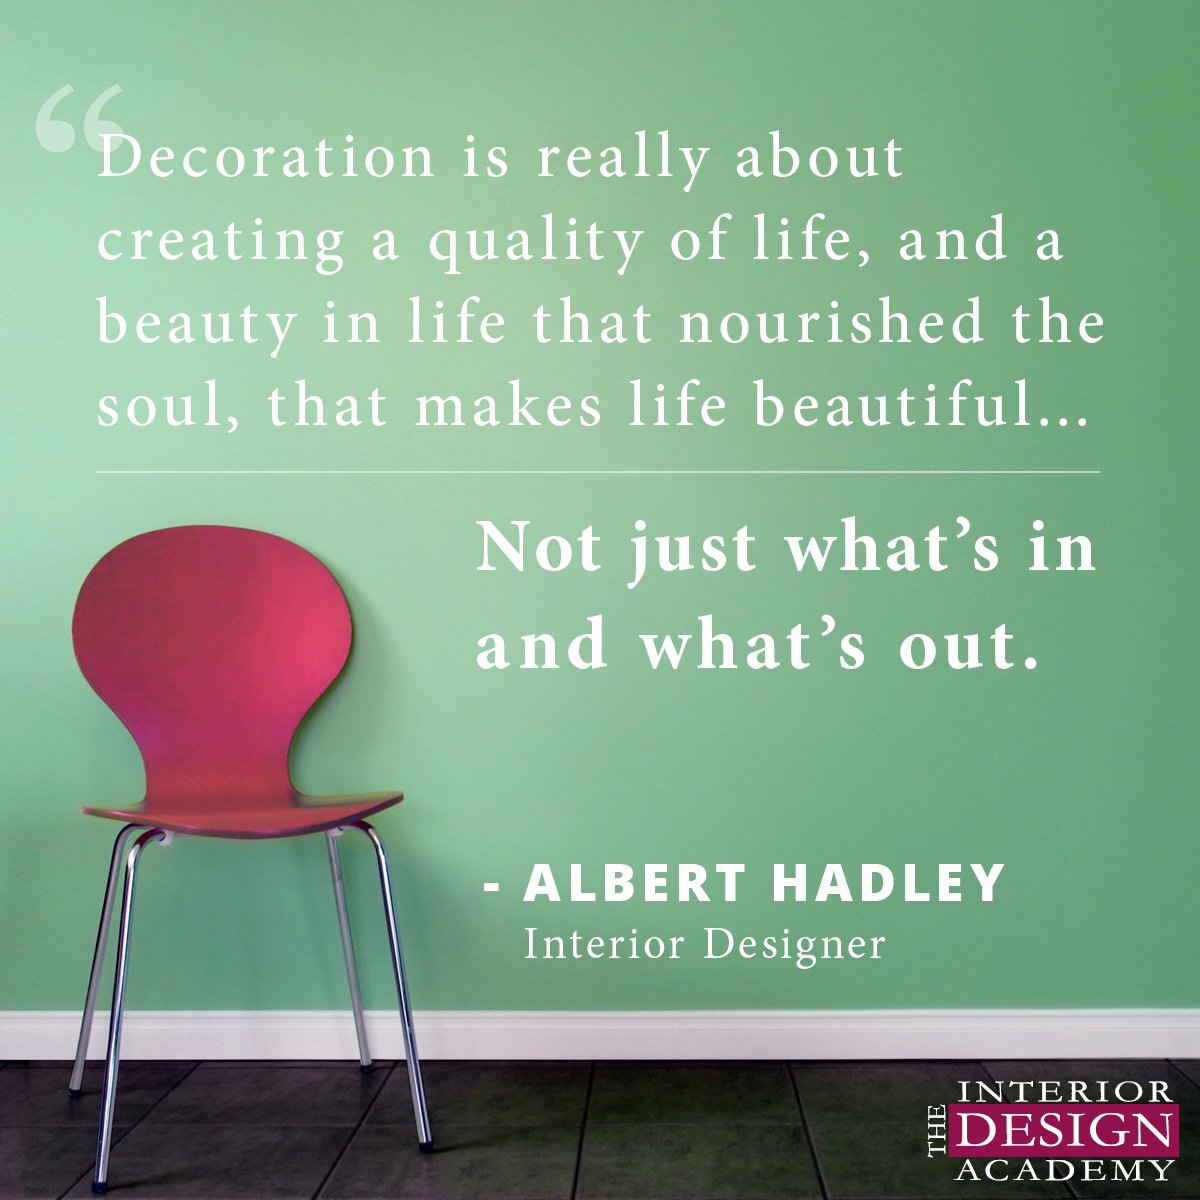 Albert Hadley on Defining Decoration